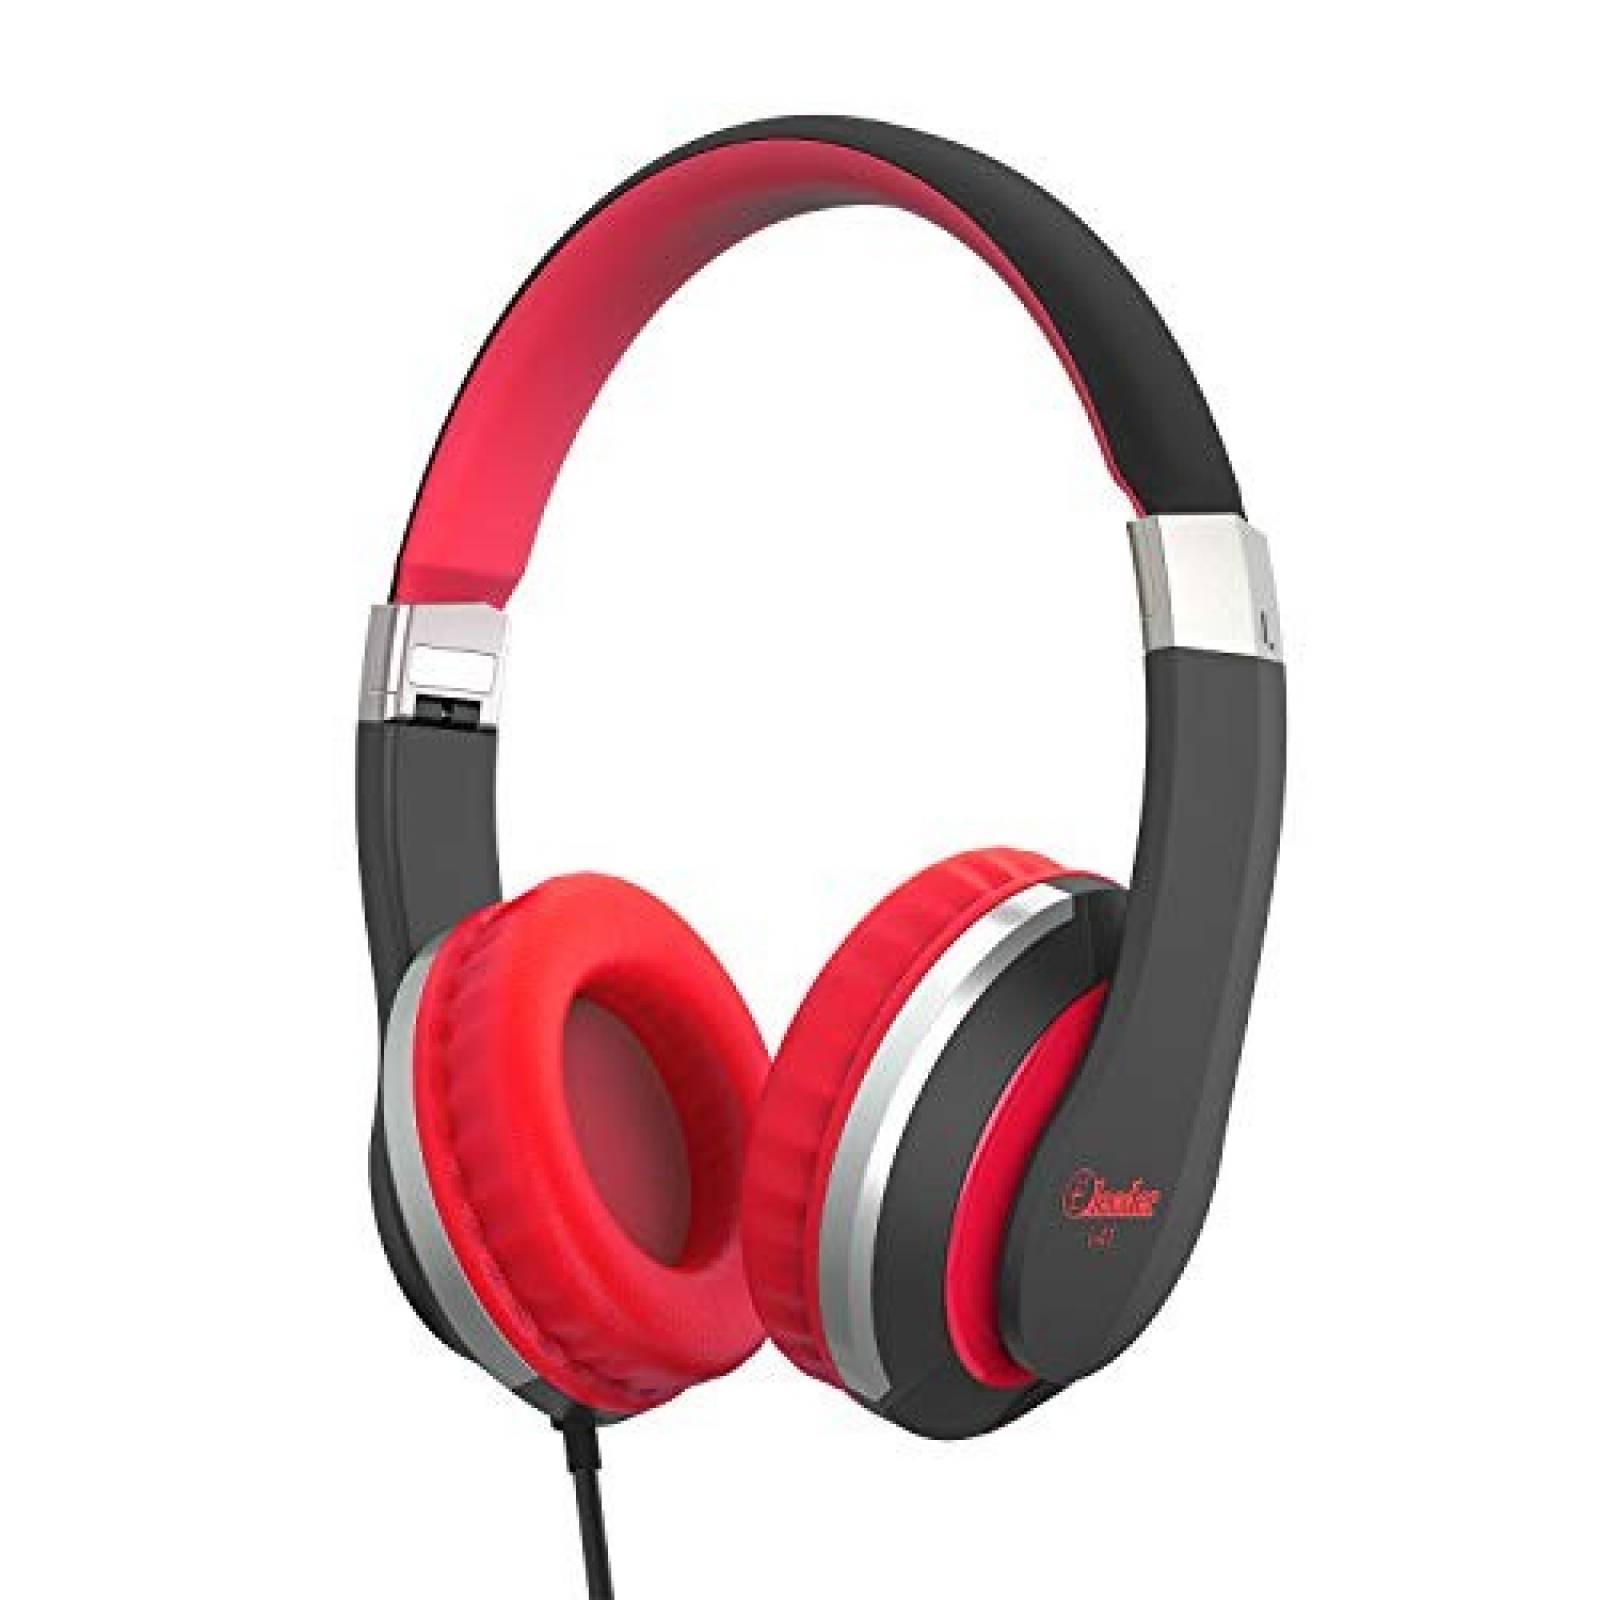 Audifonos ELECDER i41 Plegables Ajustables -Negro Rojo